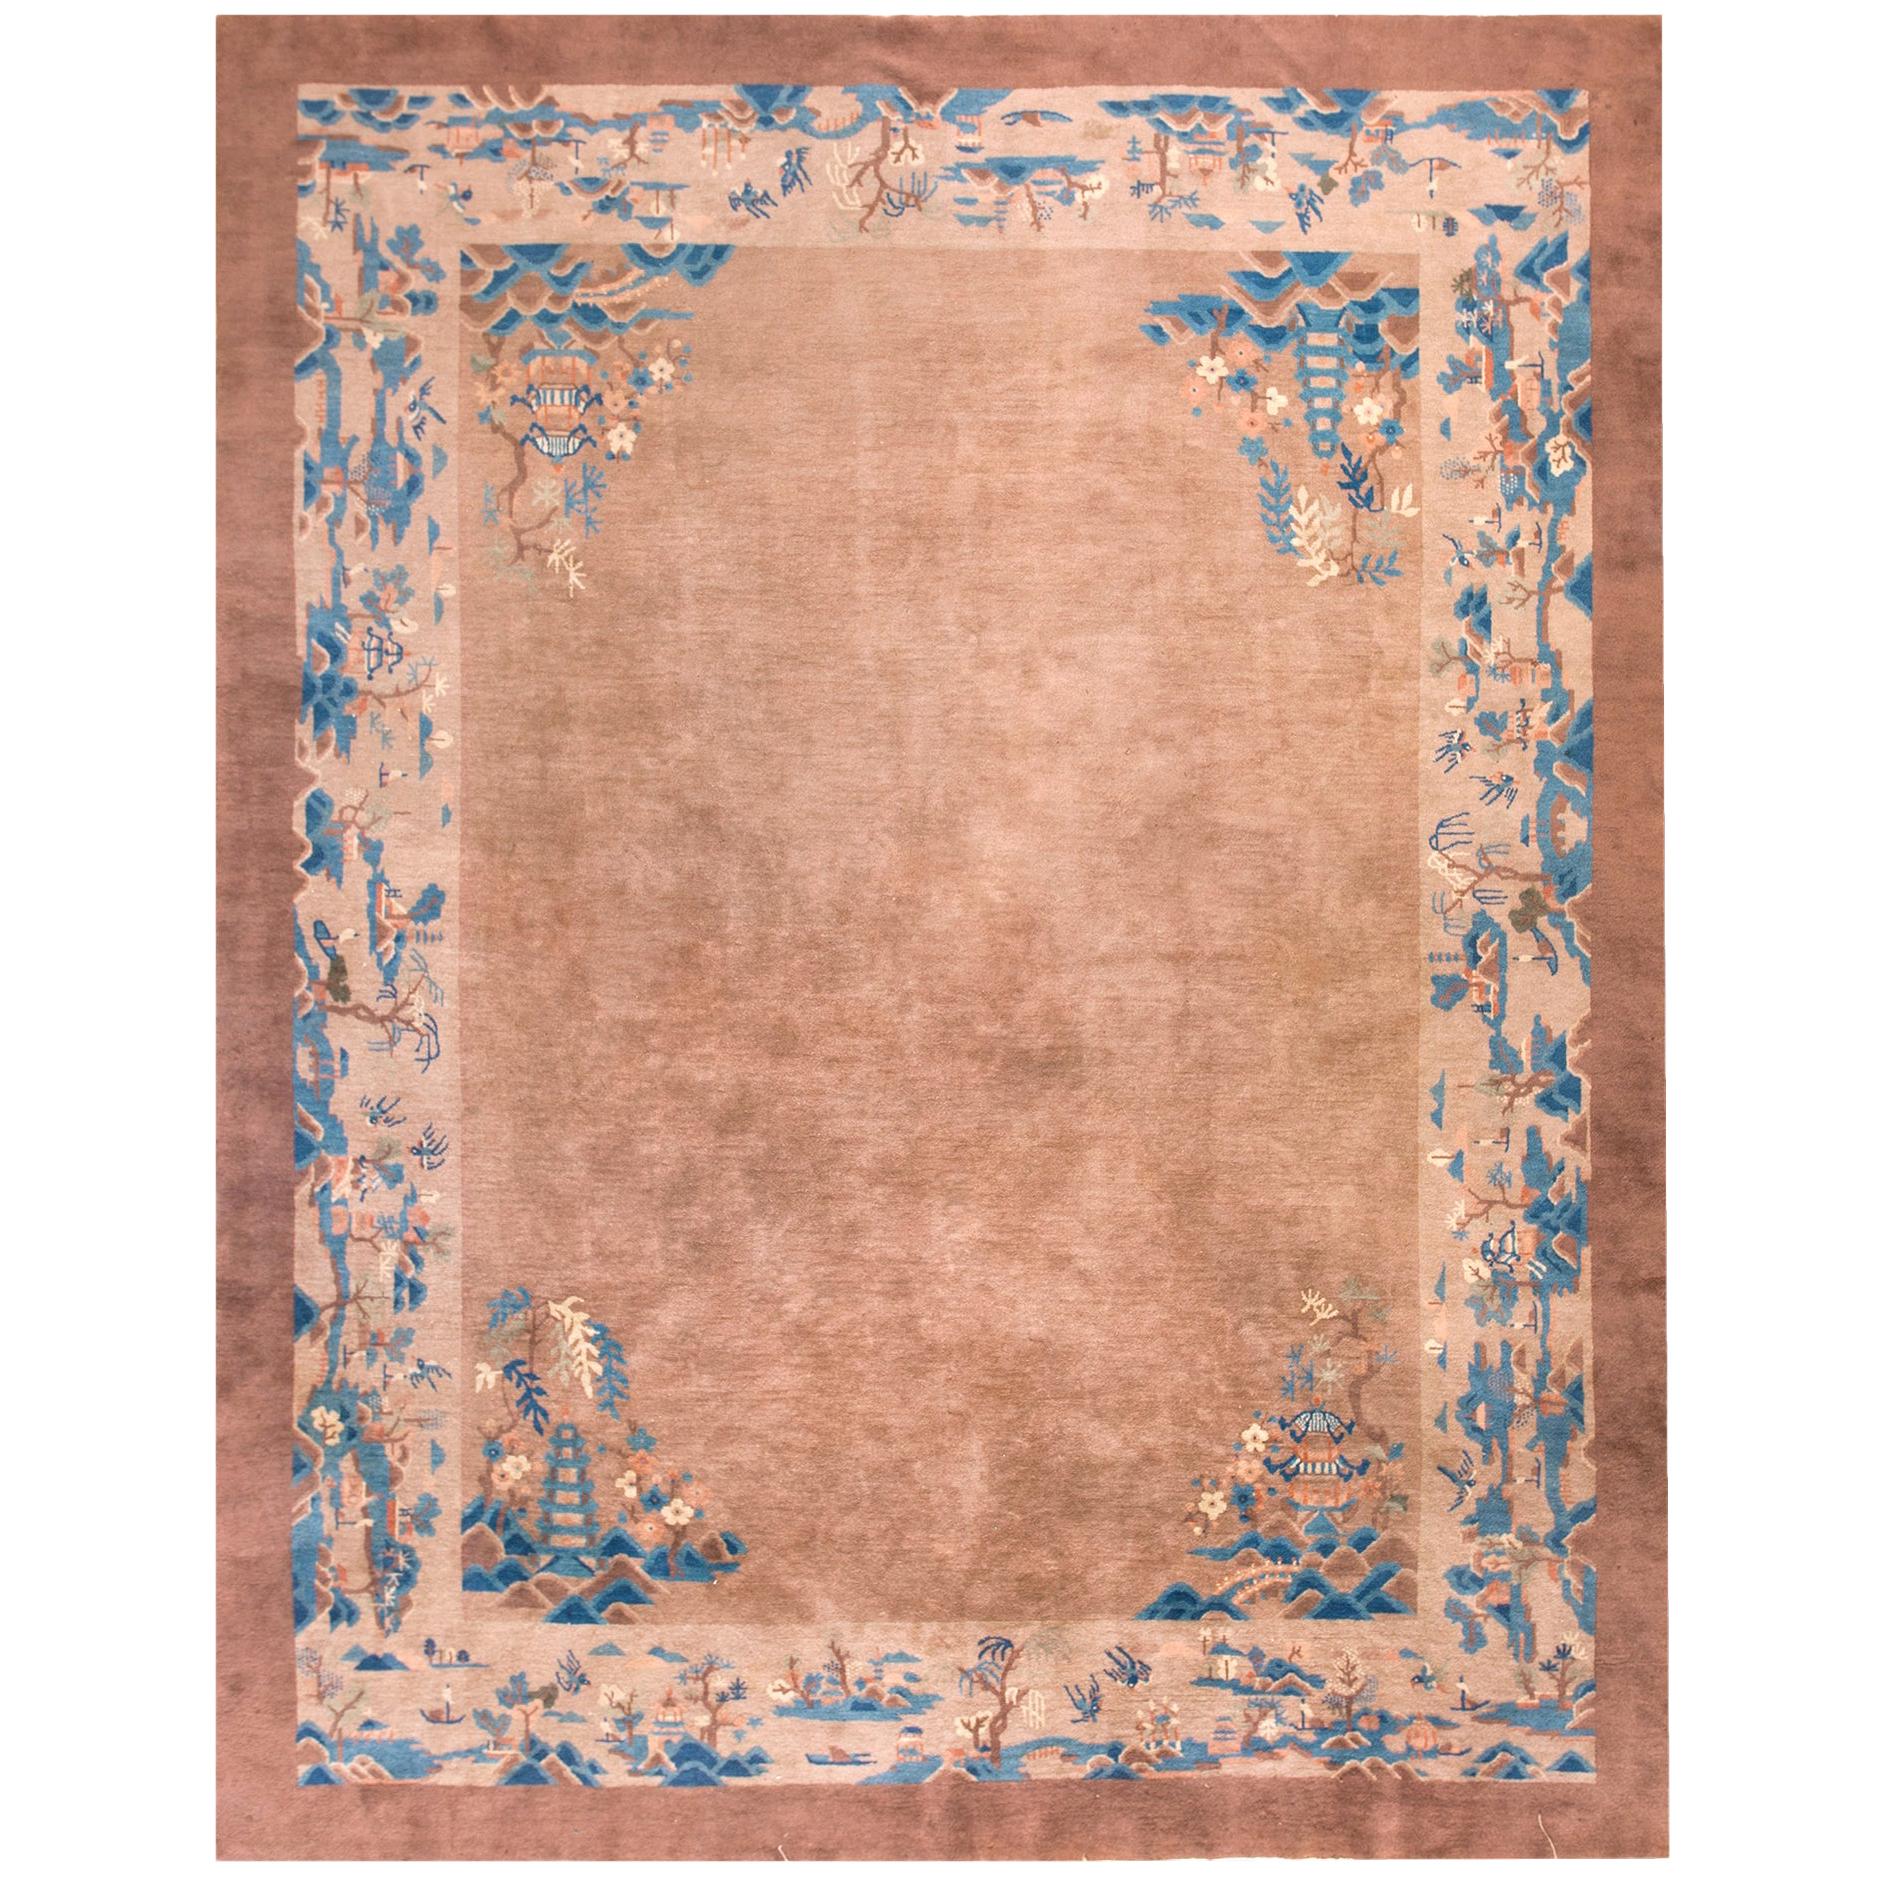 Early 20th Century Chinese Peking Carpet ( 8'8" x 10'8" - 265 x 325 )